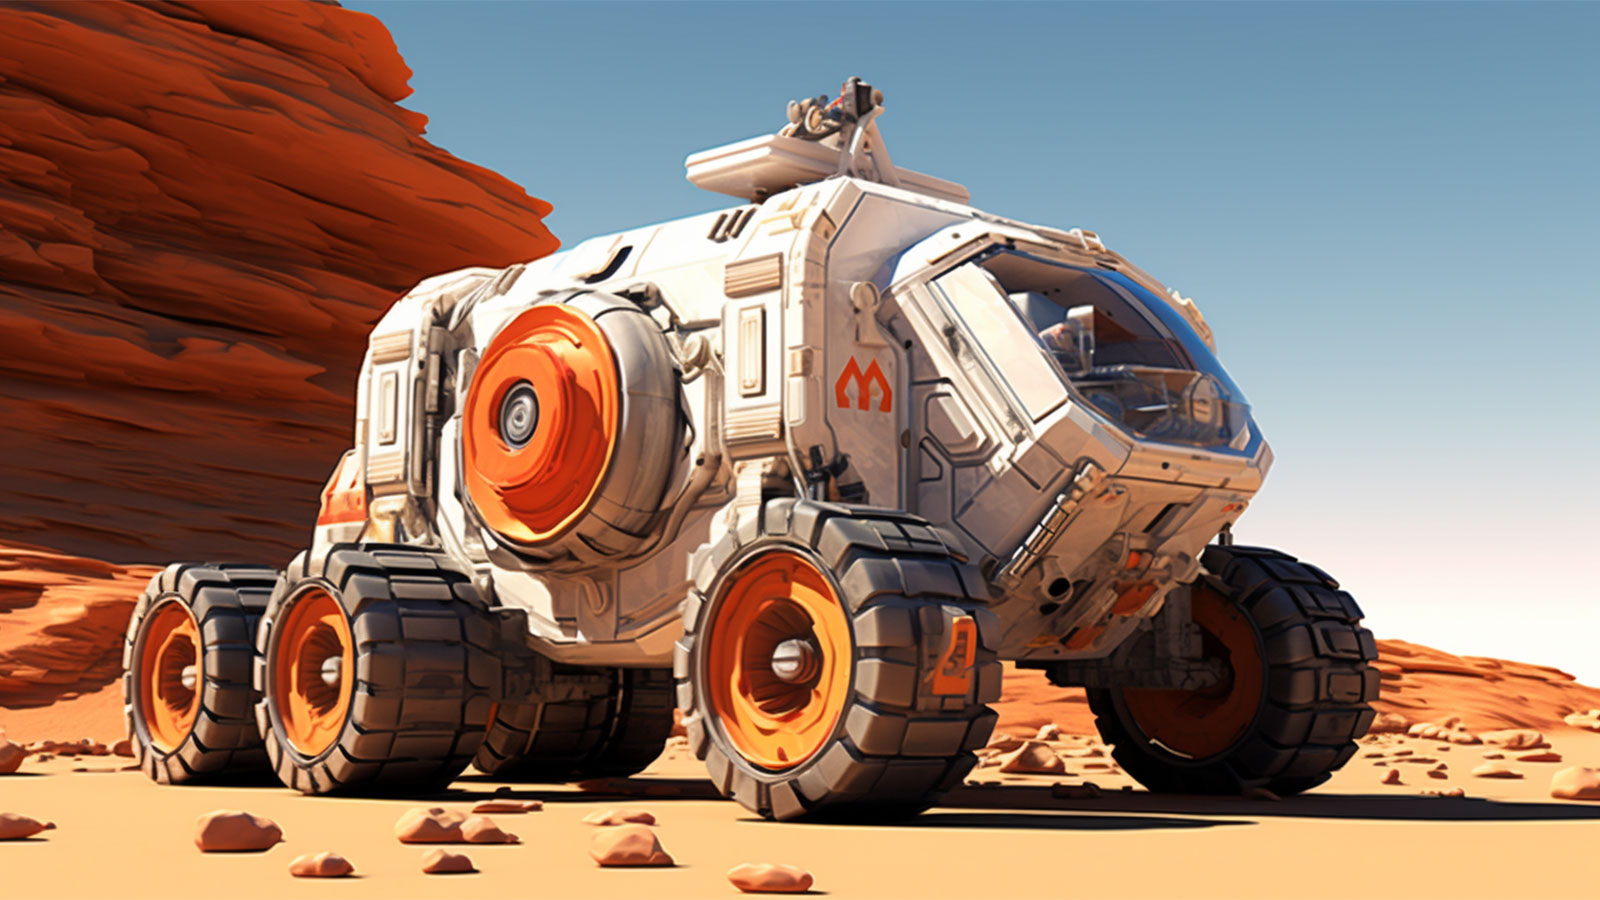 The Mars Rover AI Vehicle